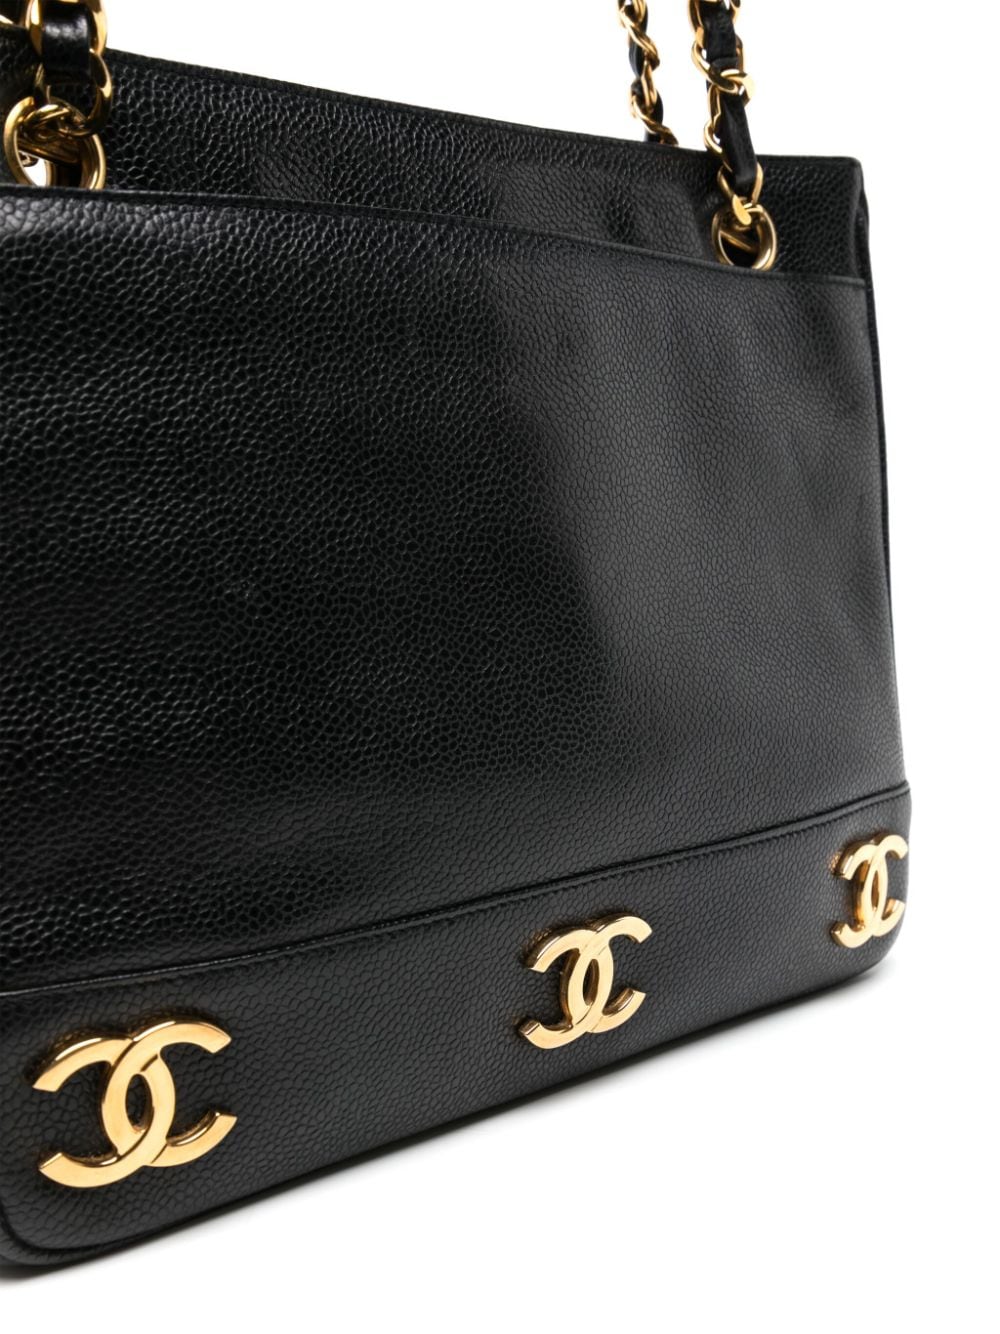 Chanel Chanel Black Caviar leather Tote shoulder bag Gold Chain CC